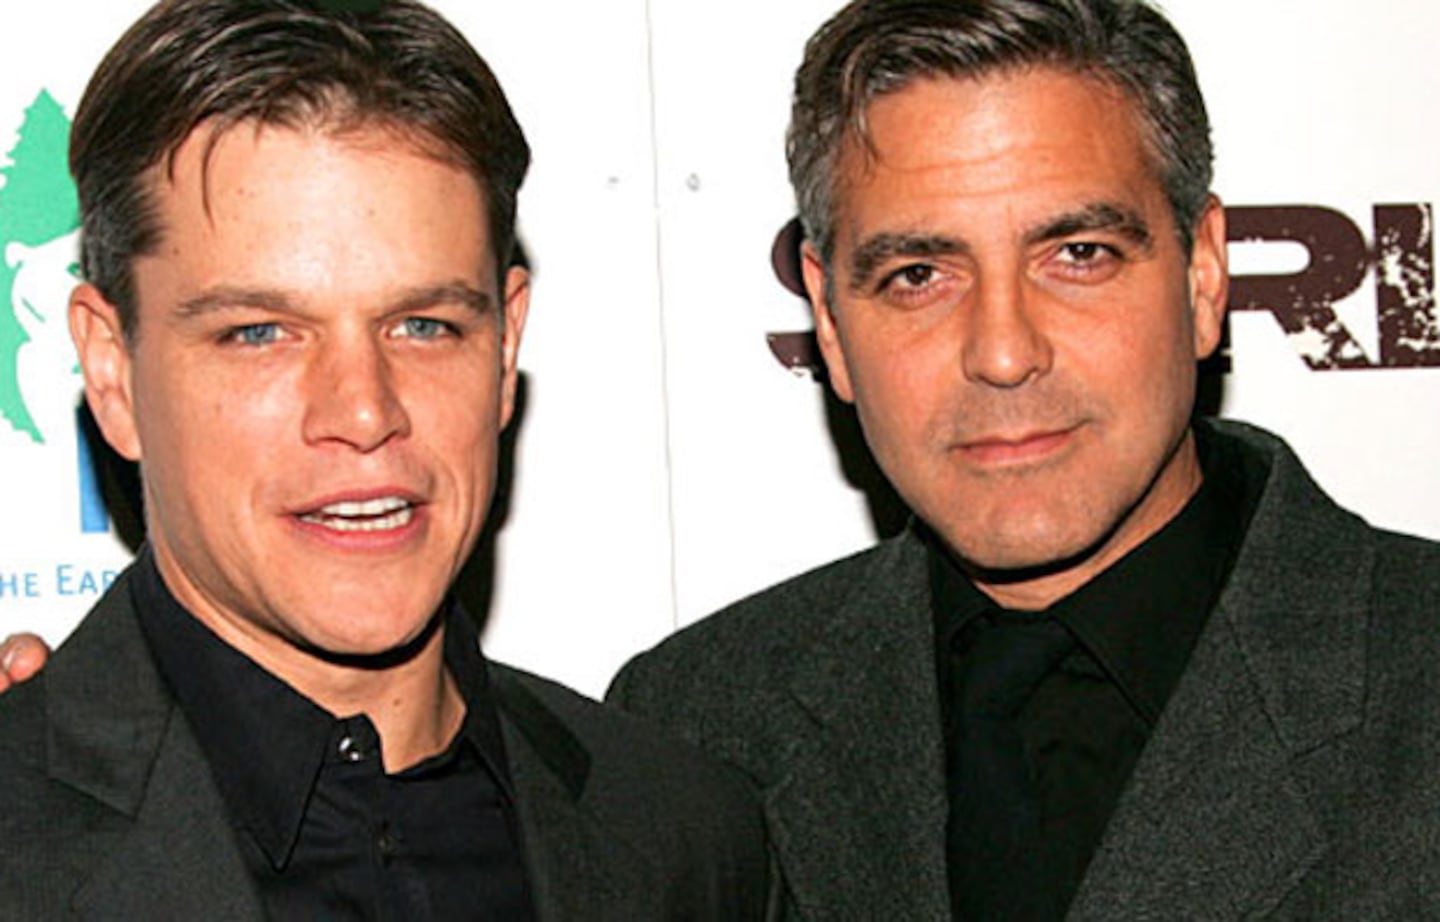 George Clooney eligió a Matt Damon como el padrino de su boda con Amal Alamuddin. (Foto: Web)